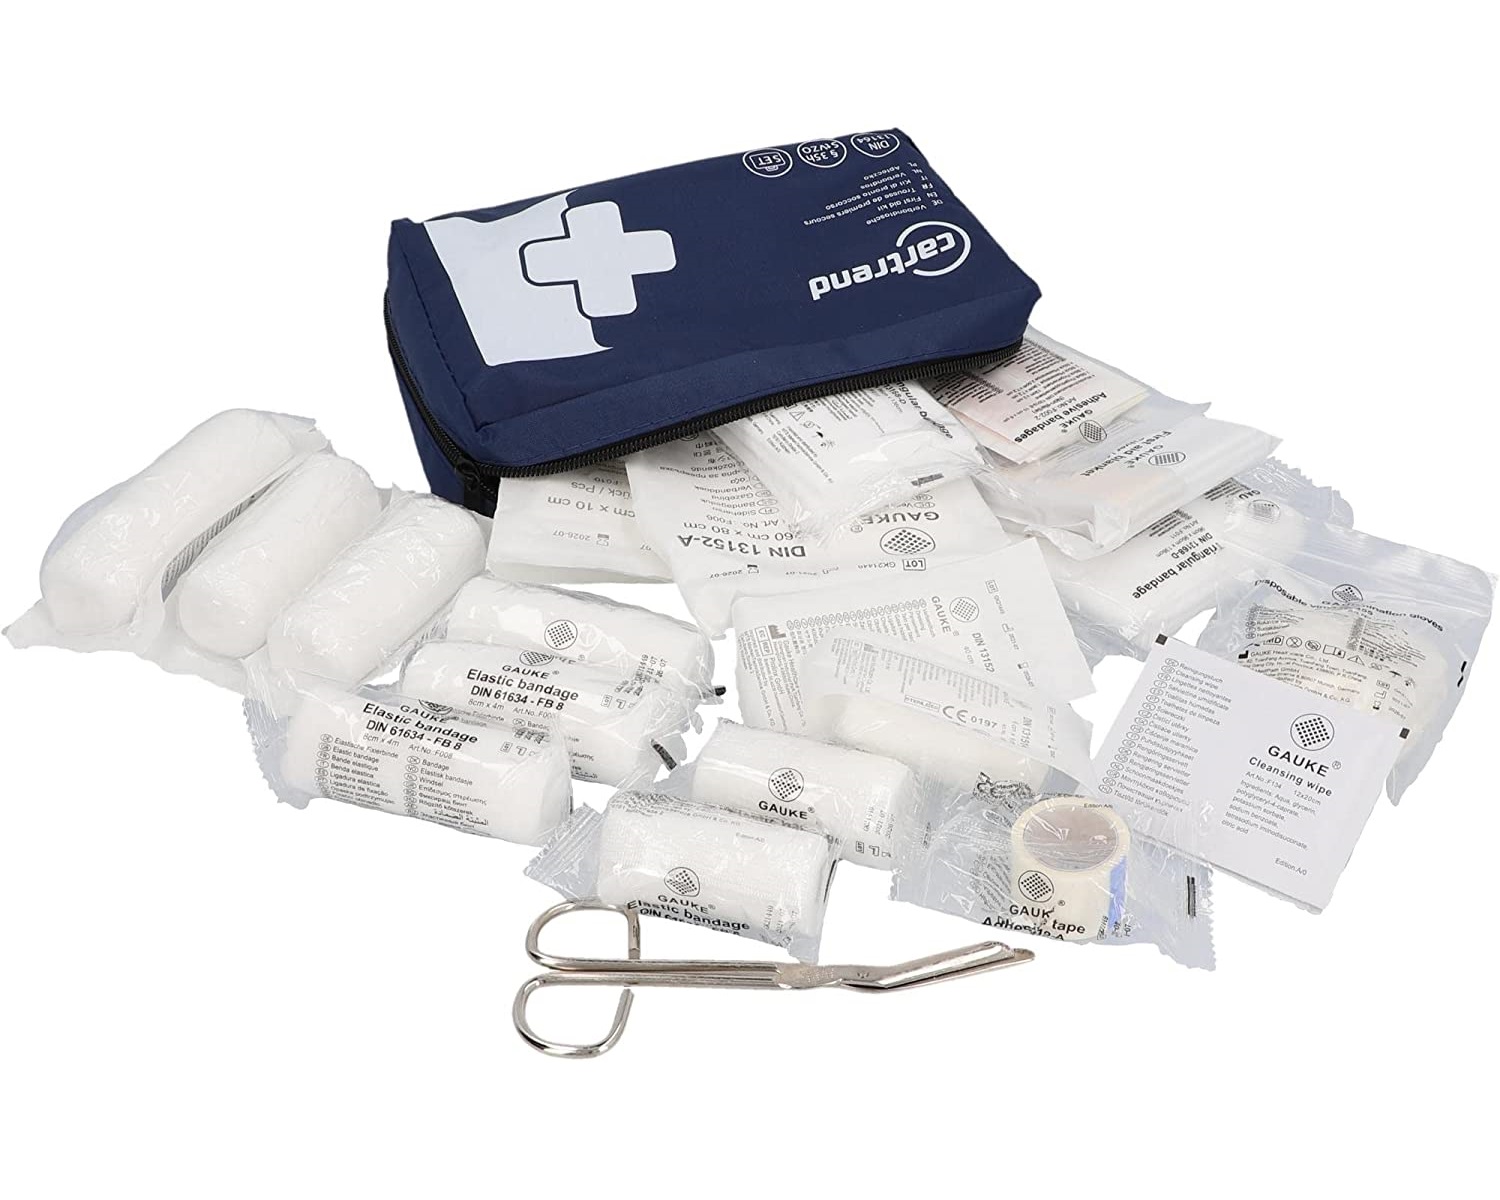 Kfz Verbandskasten Erste Hilfe, DIN 13164 First Aid Kit EAXUS